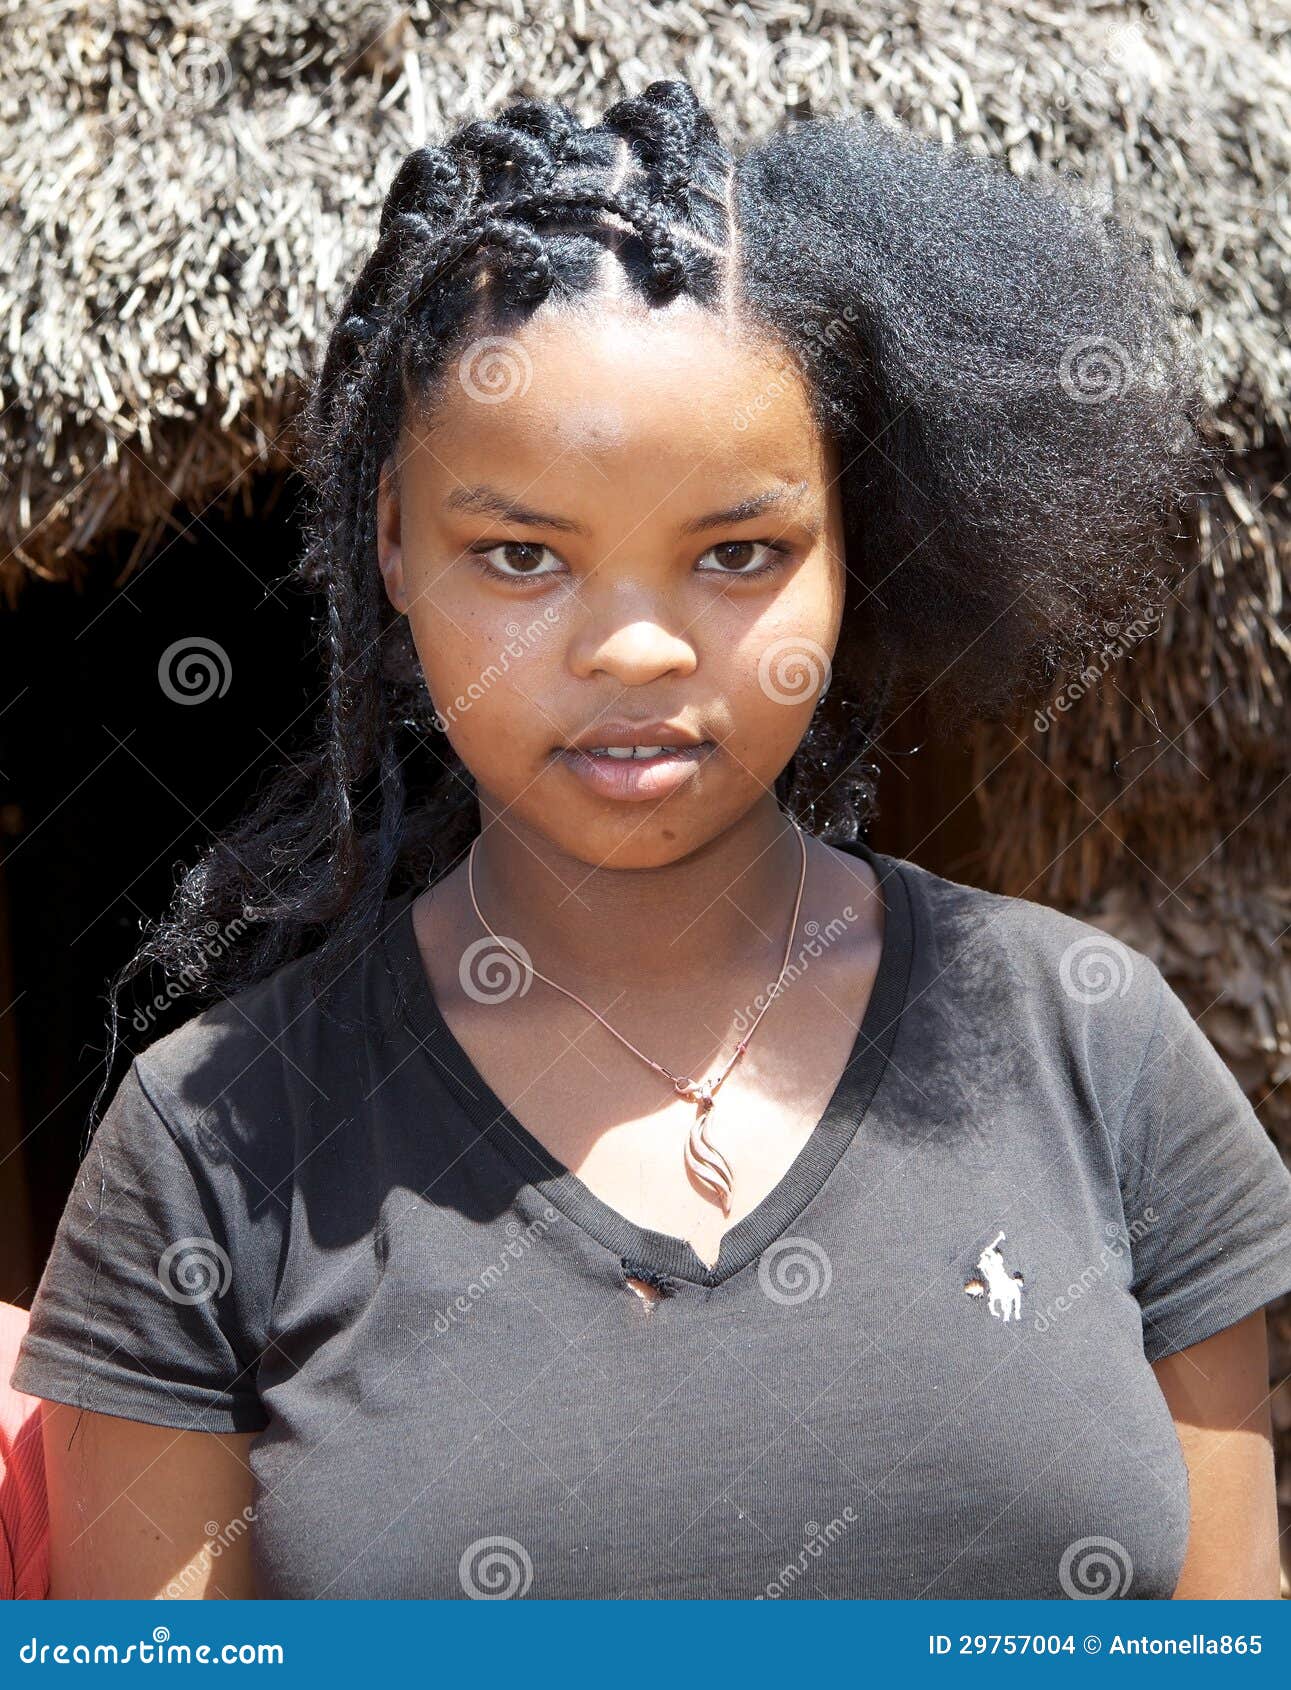 young-sidama-woman-fashion-hair-style-sidama-sidamo-pastoralist-ethnic-group-living-southern-ethiopia-29757004.jpg